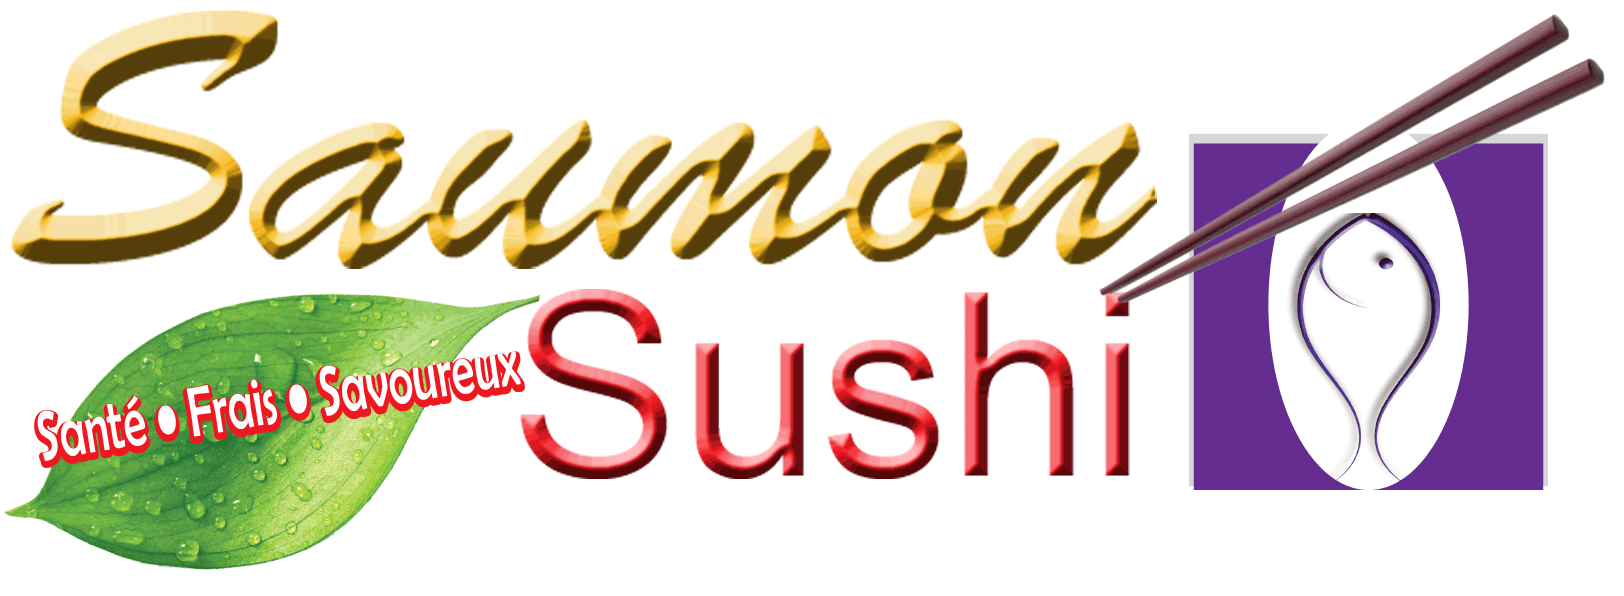 Restaurant Saumon Sushi